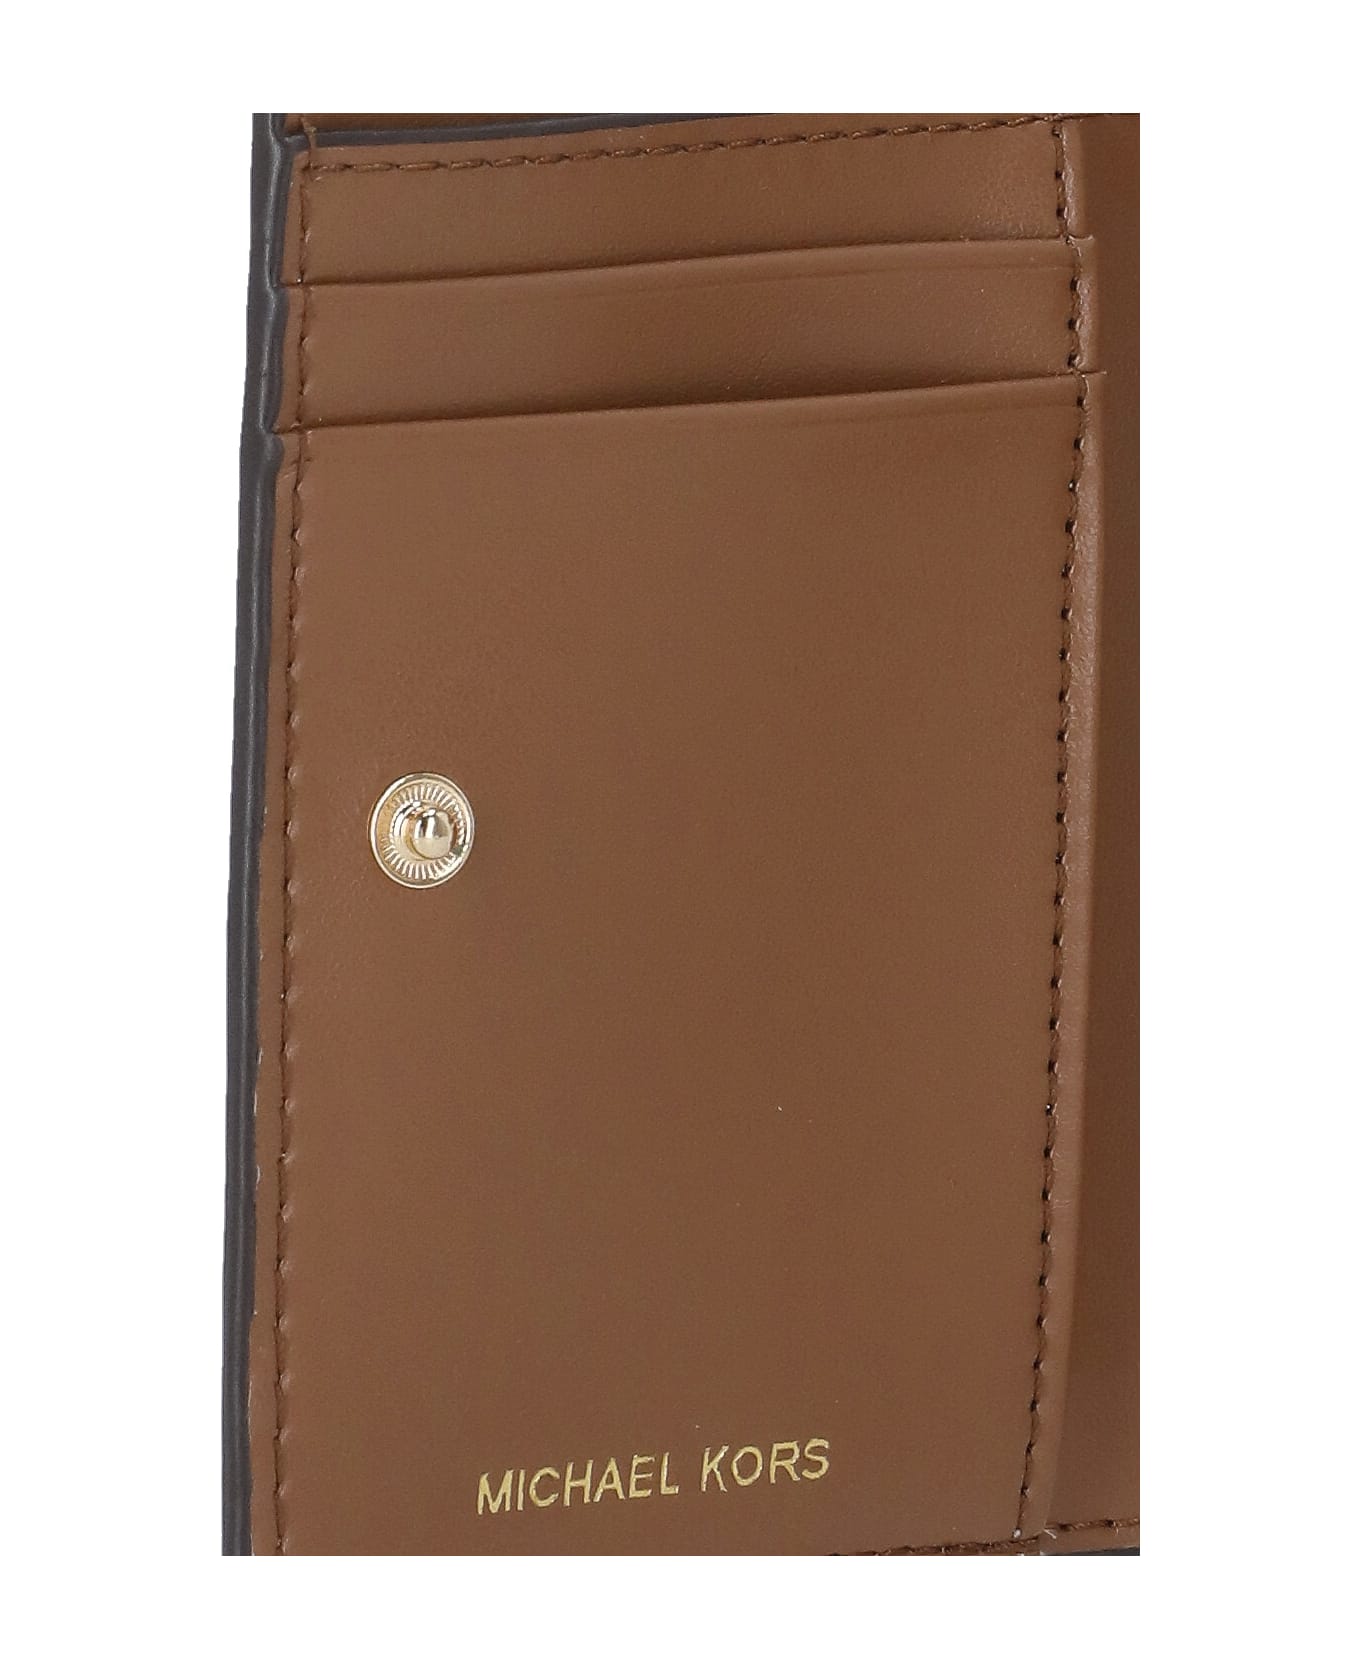 Michael Kors Jet Set Snap Billfold Wallet - Luggage 財布